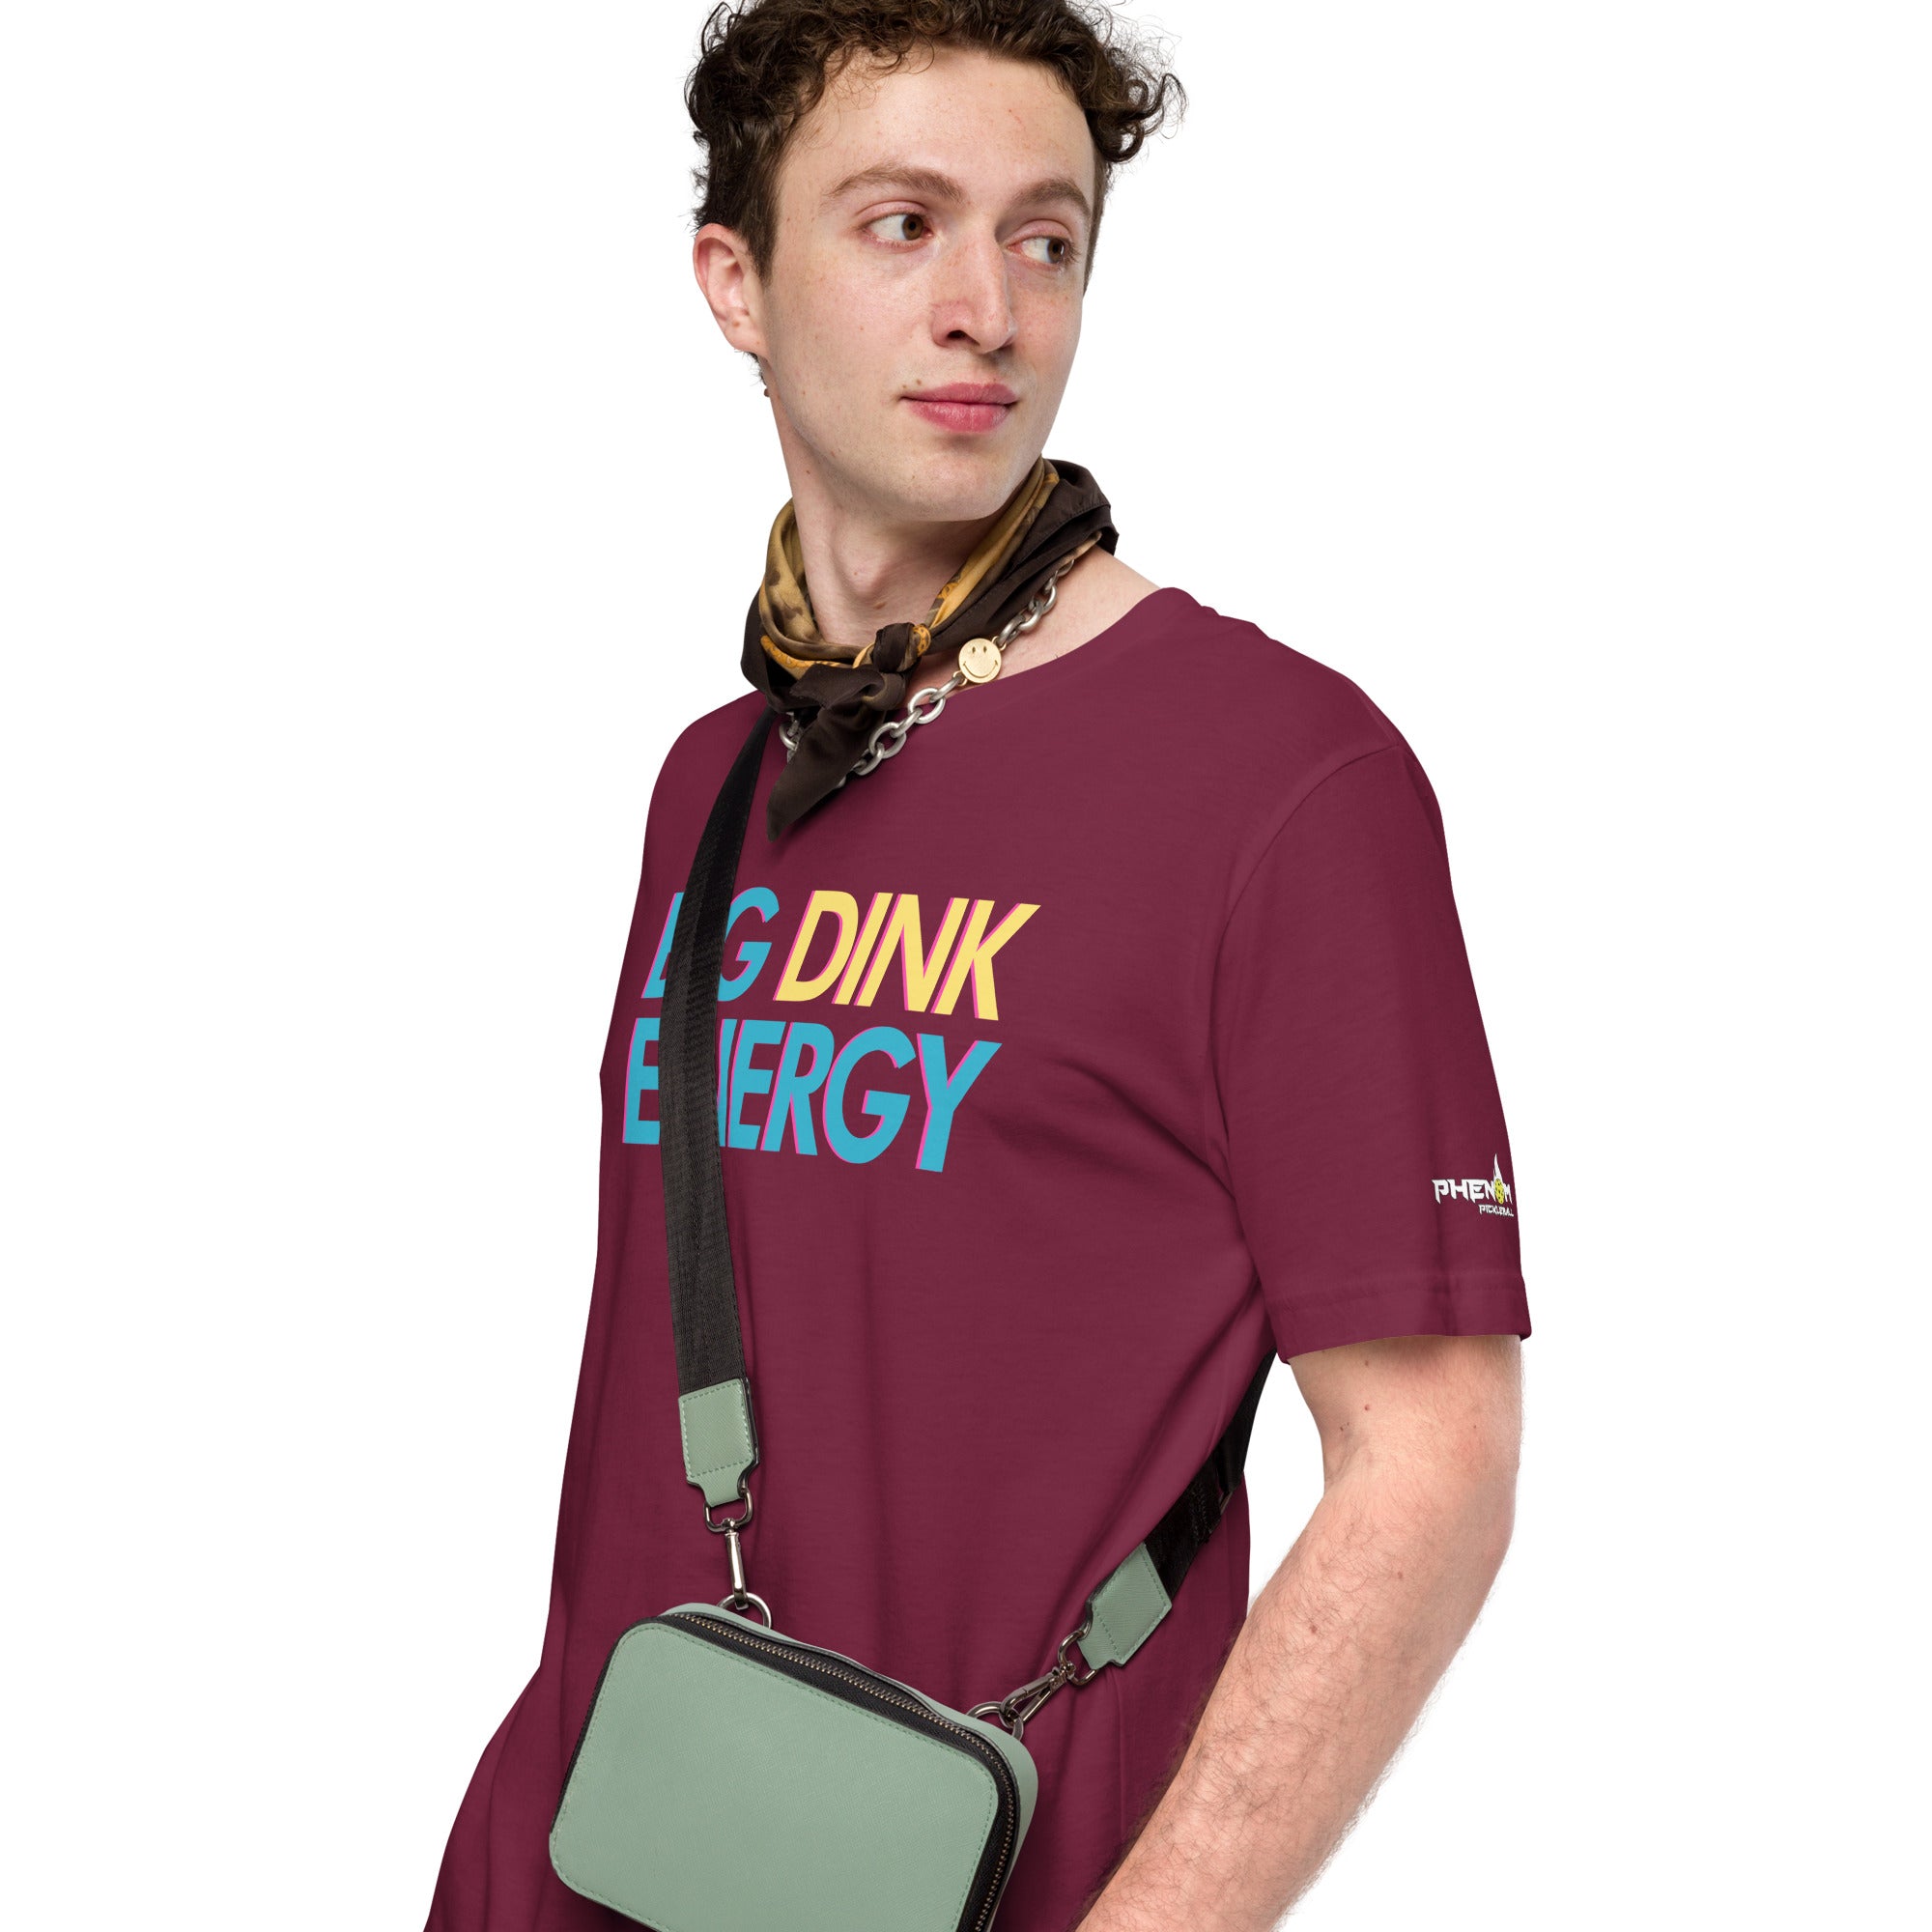 man wearing maroon big dink energy pickleball apparel shirt phenom logo side view